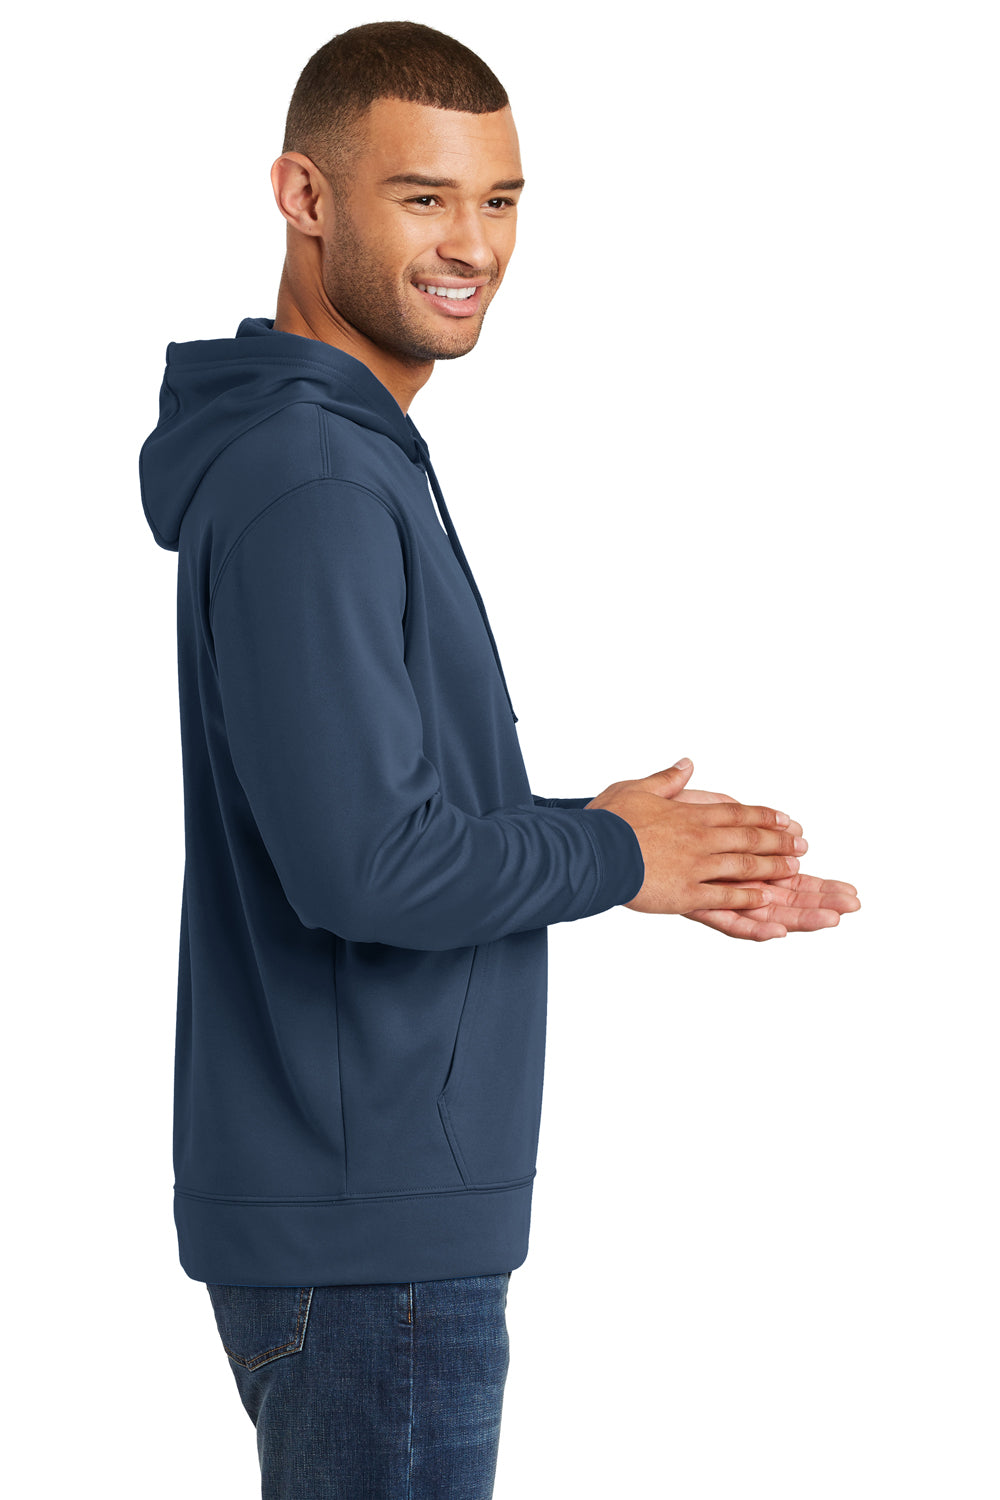 Port & Company PC590H Mens Dry Zone Performance Moisture Wicking Fleece Hooded Sweatshirt Hoodie Navy Blue Side